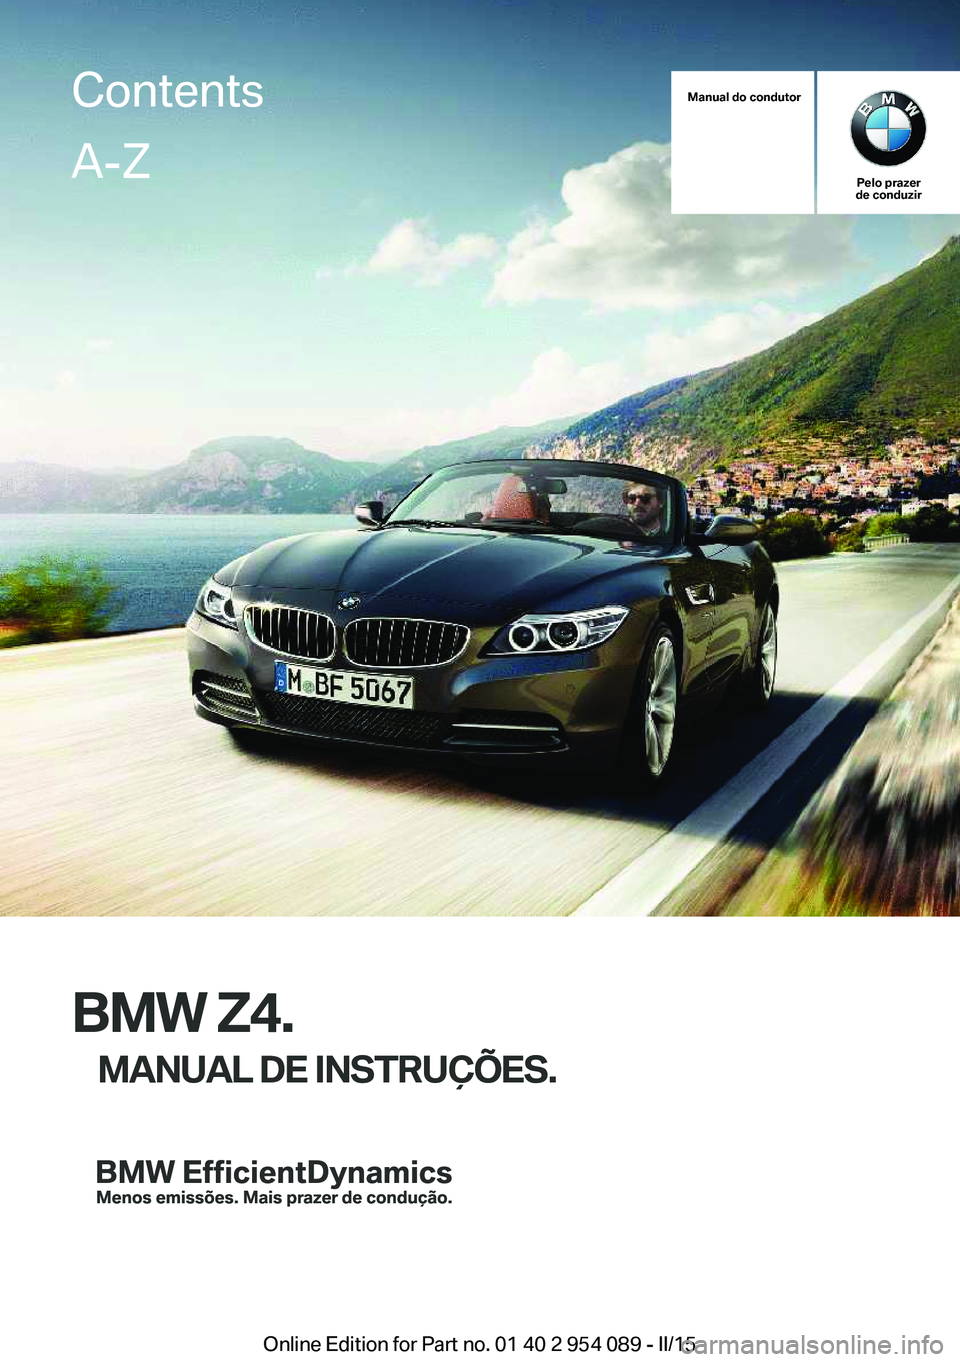 BMW Z4 2016  Manual do condutor (in Portuguese) Manual do condutor
Pelo prazer
de conduzir
BMW Z4.
MANUAL DE INSTRUÇÕES.
ContentsA-Z
Online Edition for Part no. 01 40 2 954 089 - II/15   